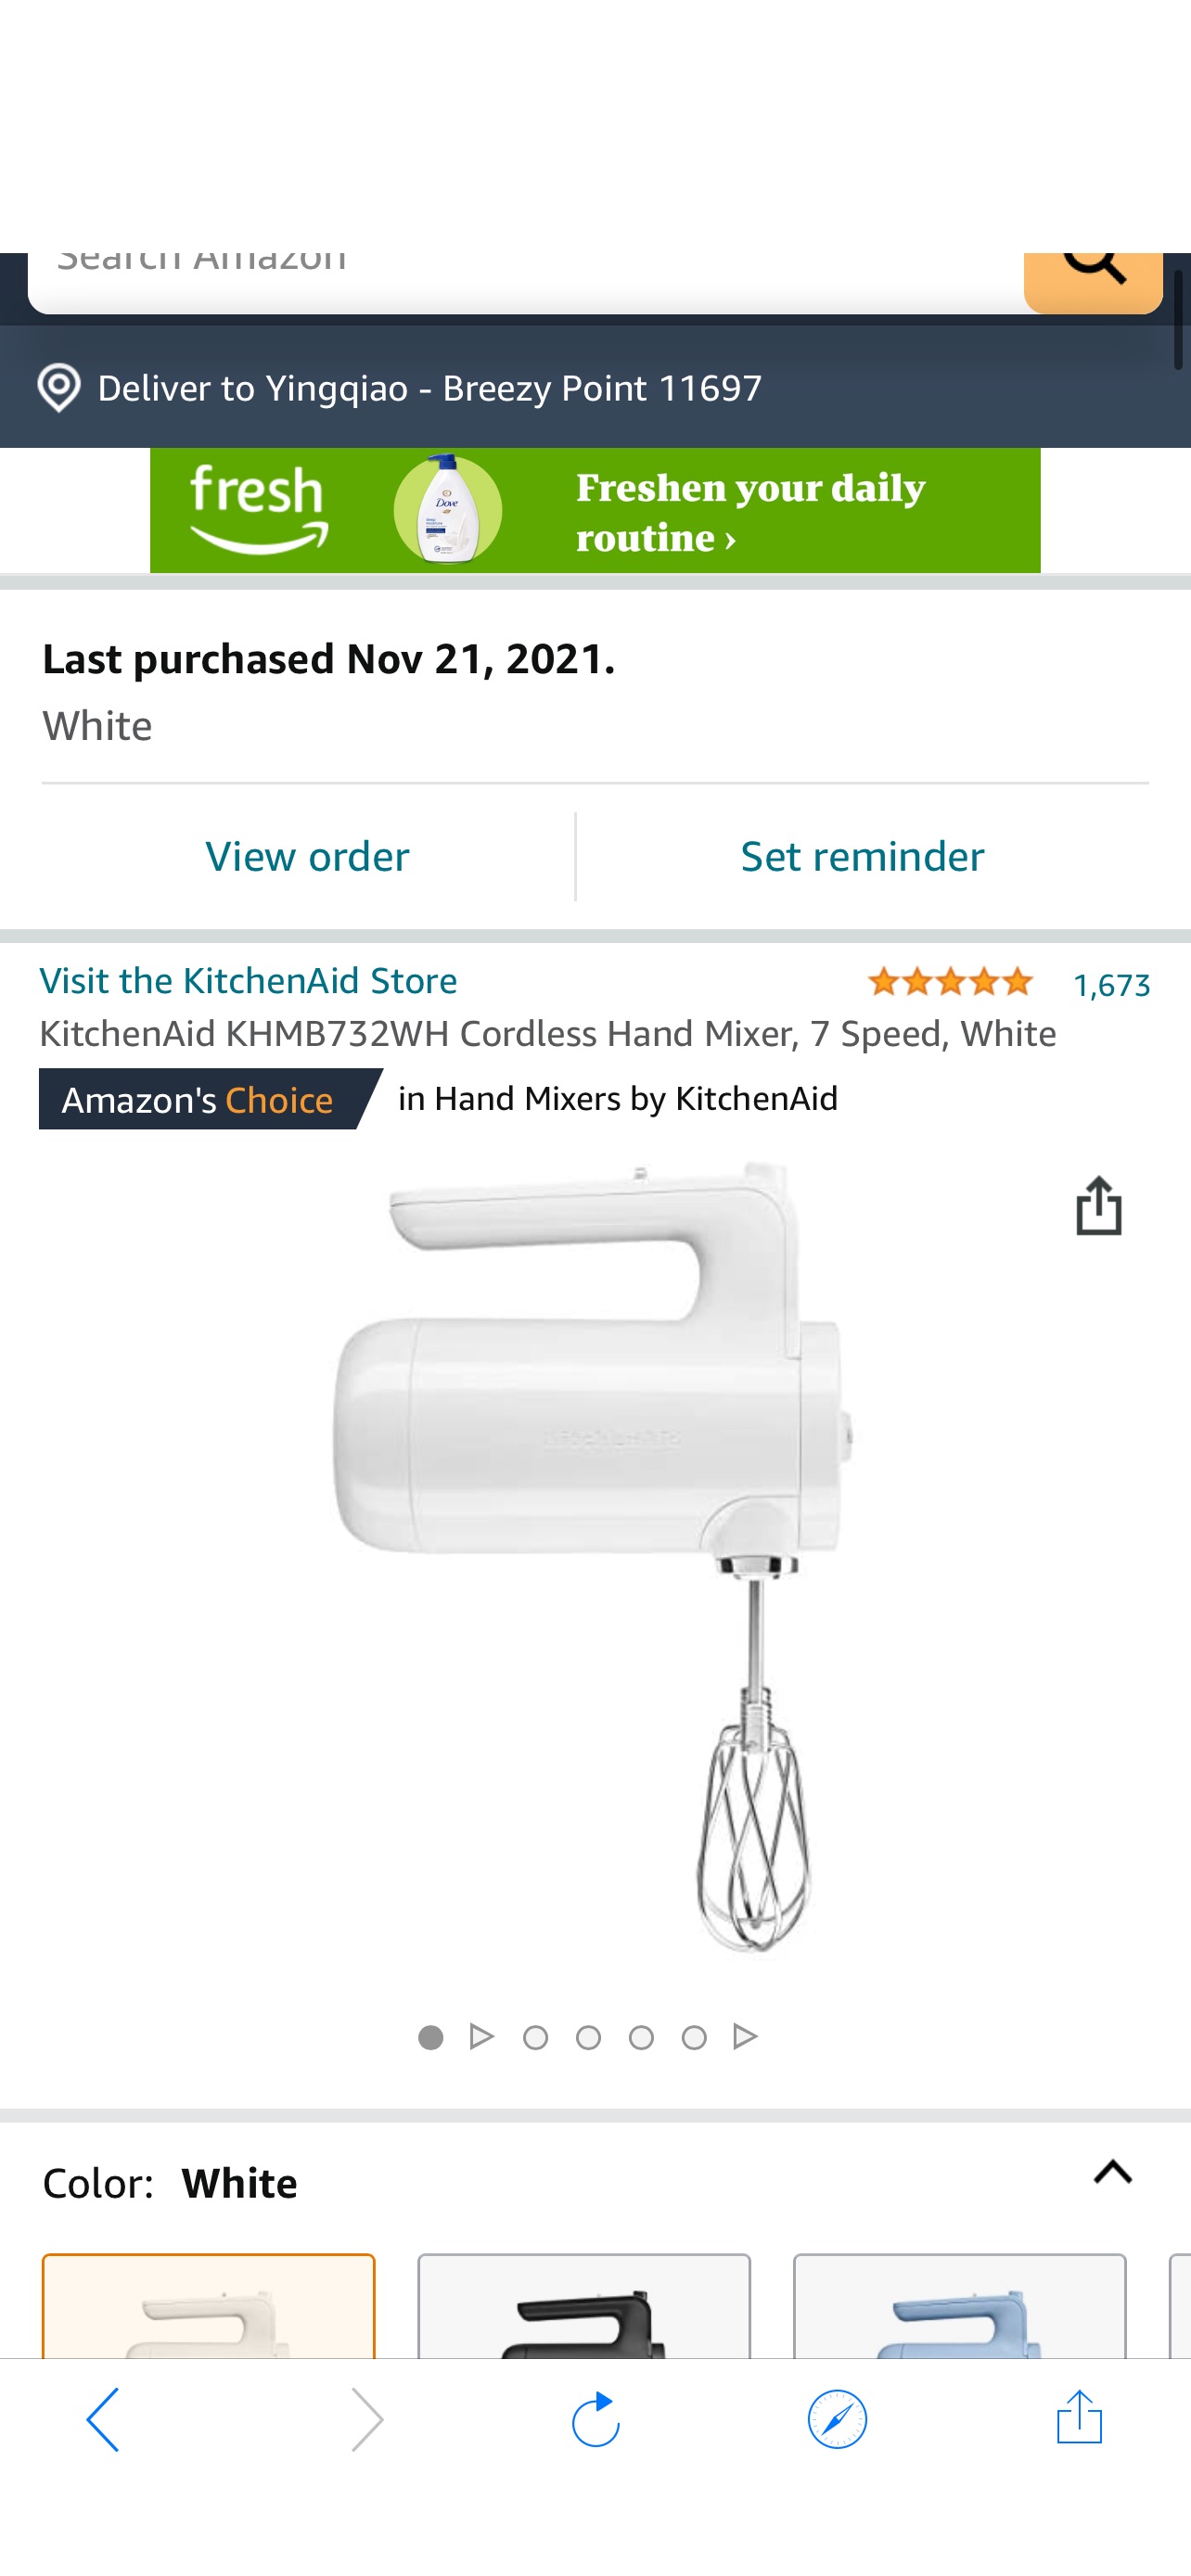 Amazon.com: KitchenAid KHMB732WH Cordless Hand Mixer, 7 Speed, White: Home & Kitchen手持搅拌机